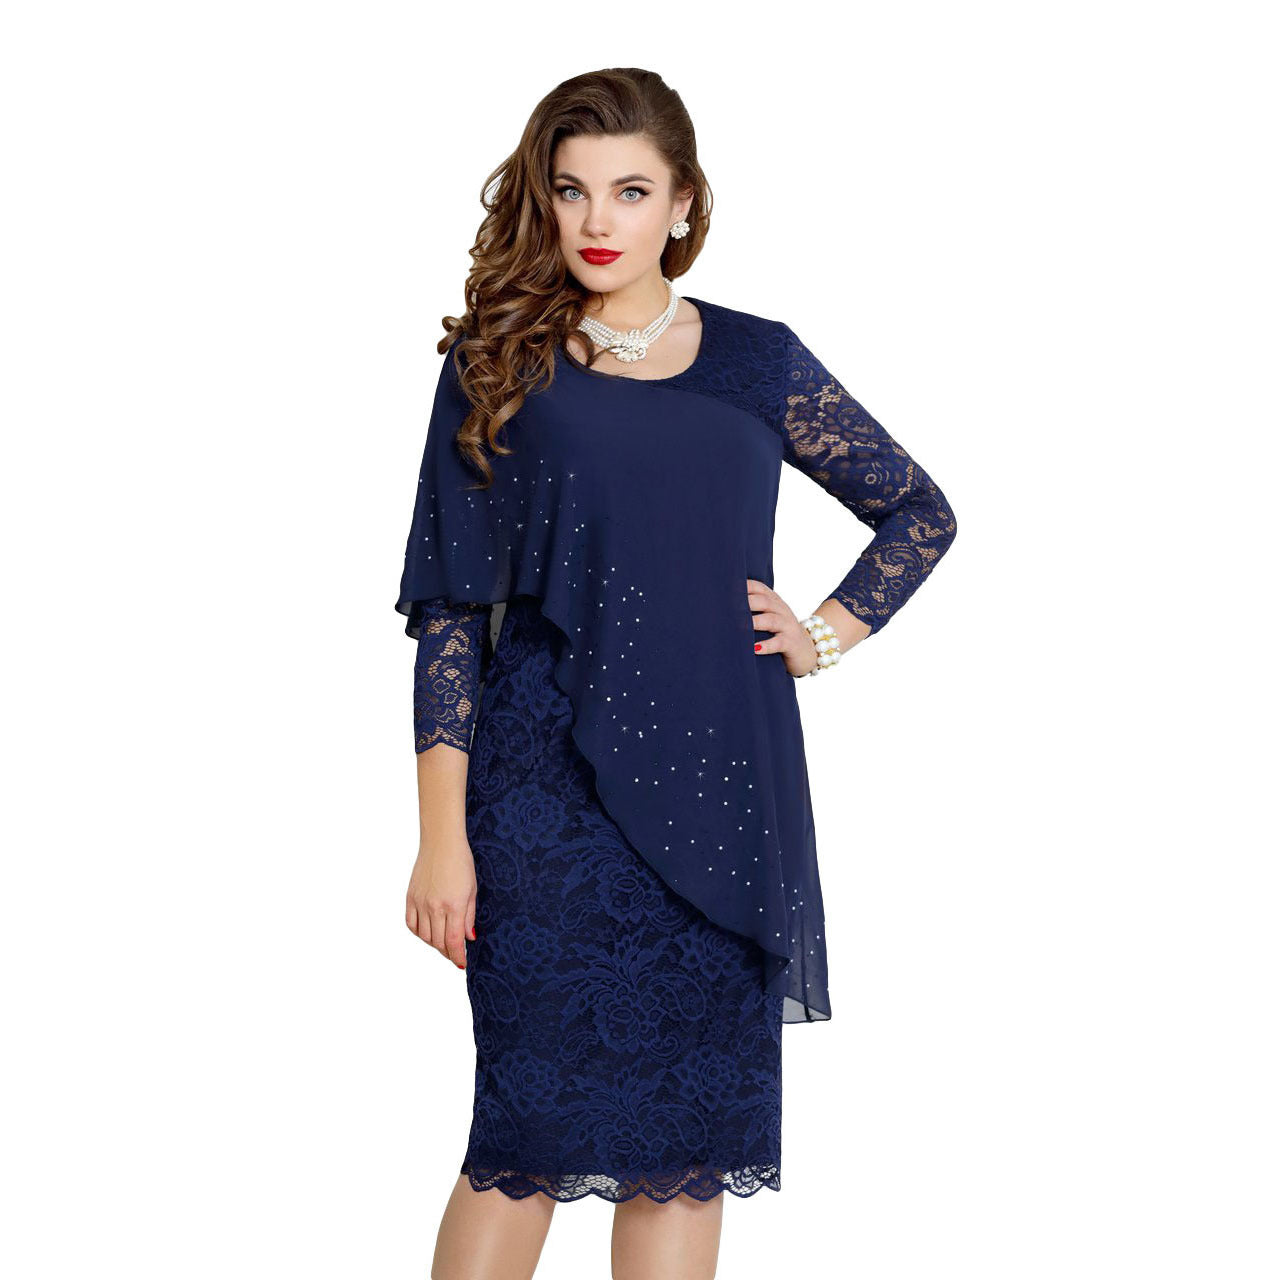 Large Size Solid Color Stitching Basic Model 3/4 Sleeve Fashion Slim Evening Party Dress